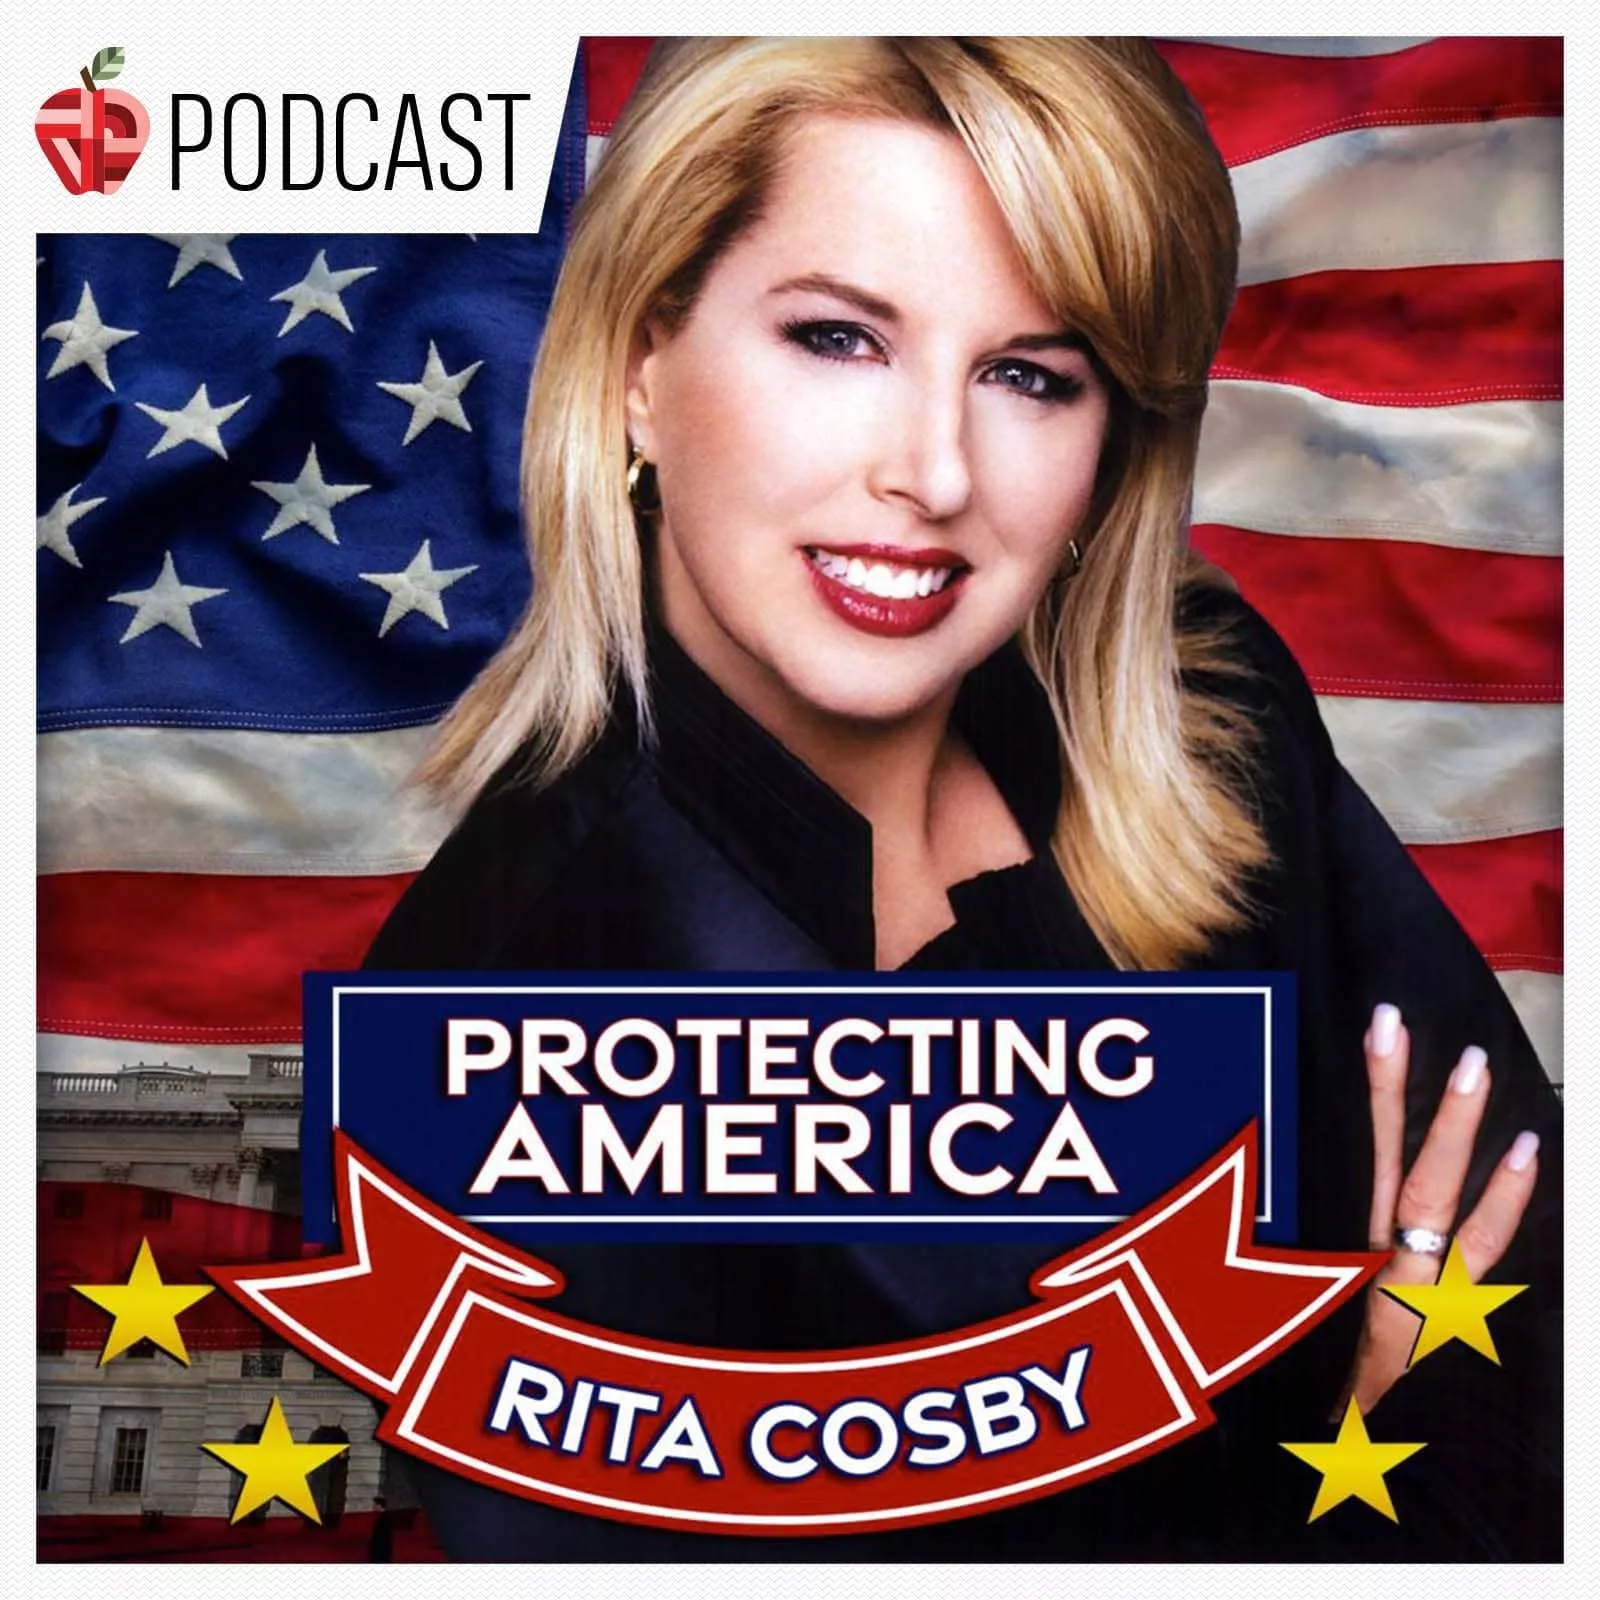 rita-cosby-protecting-america-correct-podcast-new-logo708659